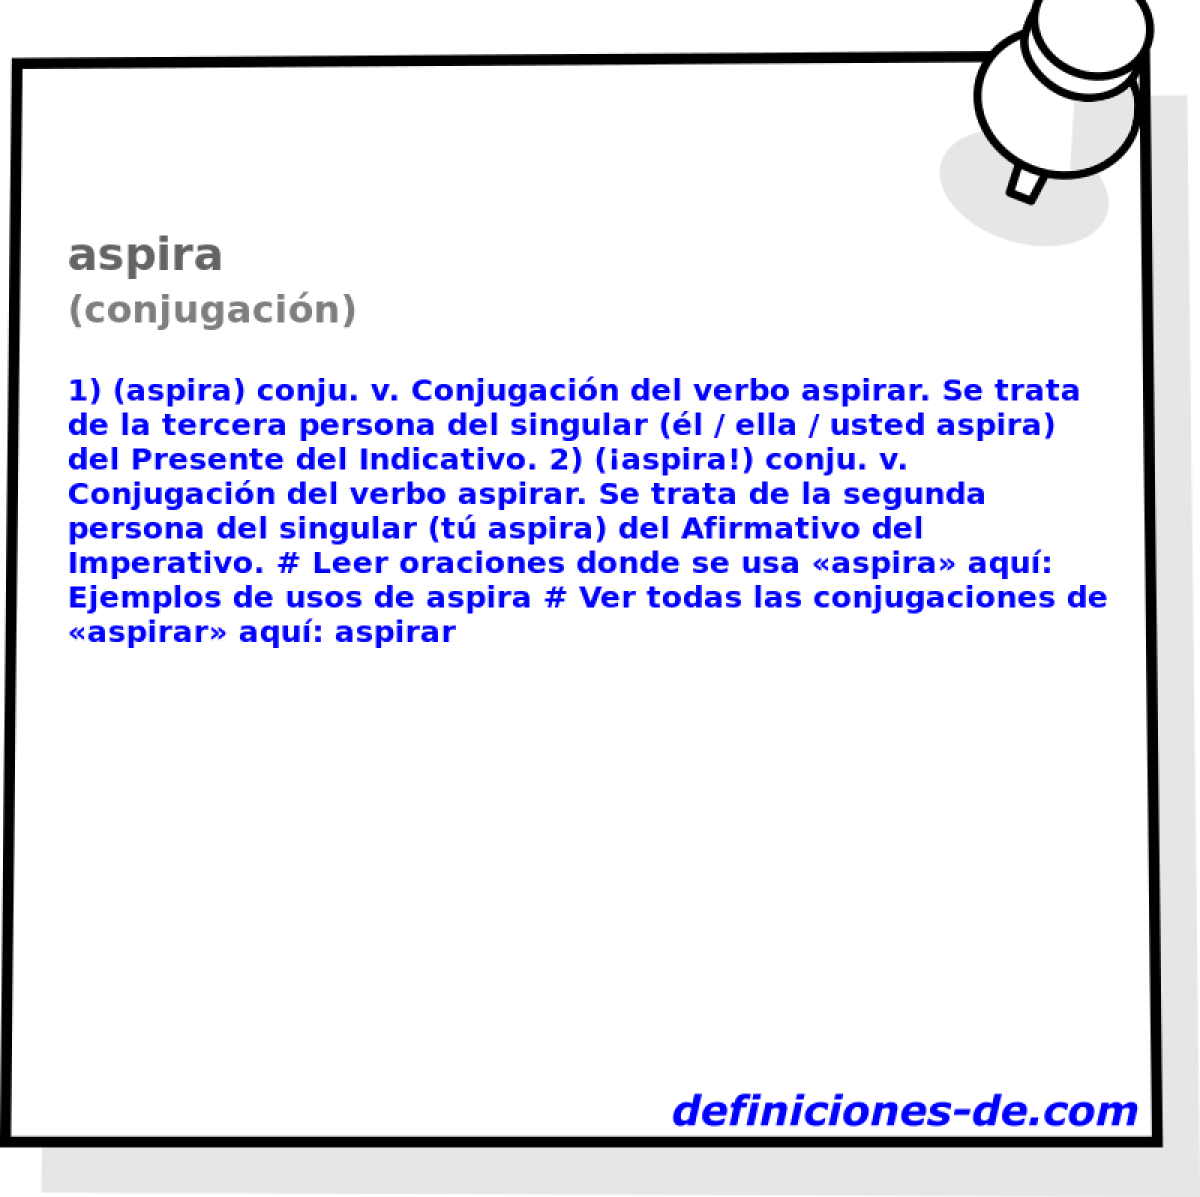 aspira (conjugacin)